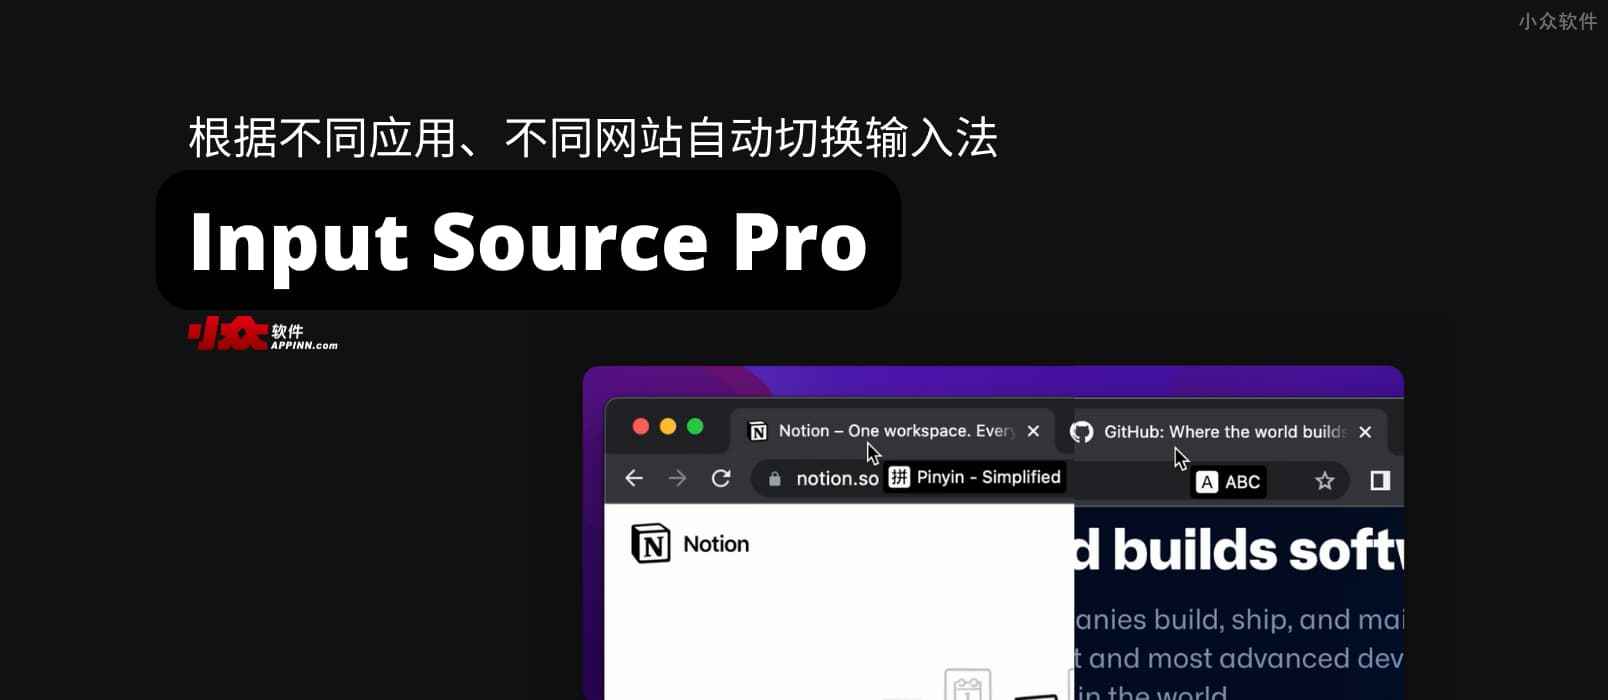 Input Source Pro - 根据不同应用、不同网站自动切换输入法，并提示当前输入法状态[macOS]
